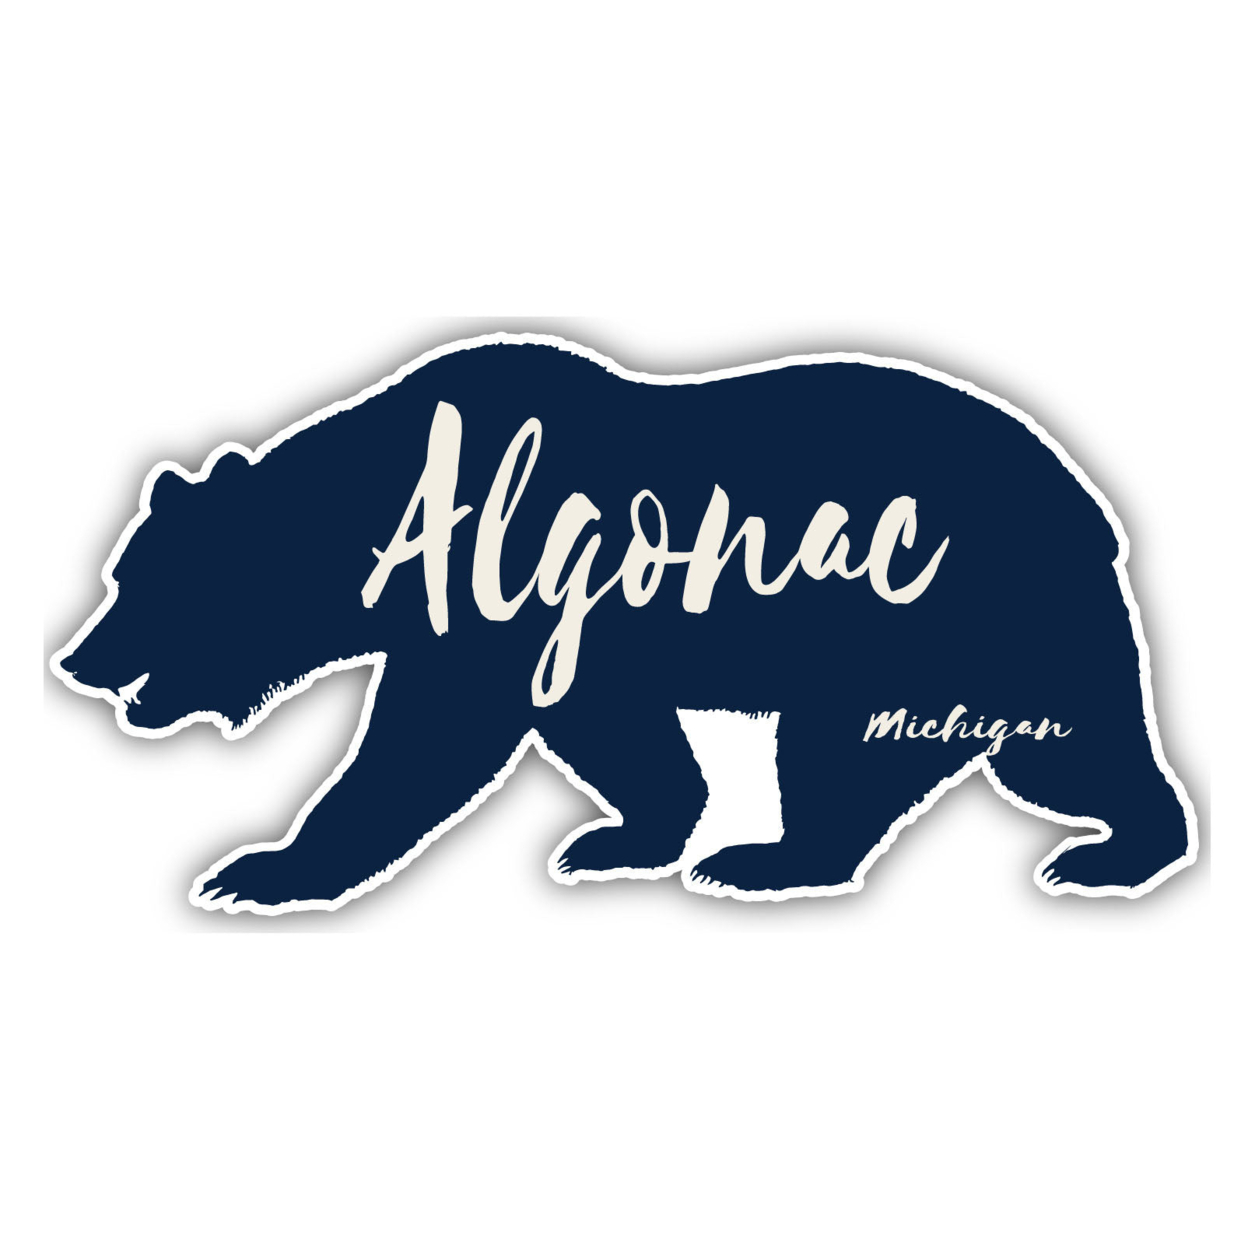 Algonac Michigan Souvenir Decorative Stickers (Choose Theme And Size) - Single Unit, 6-Inch, Bear